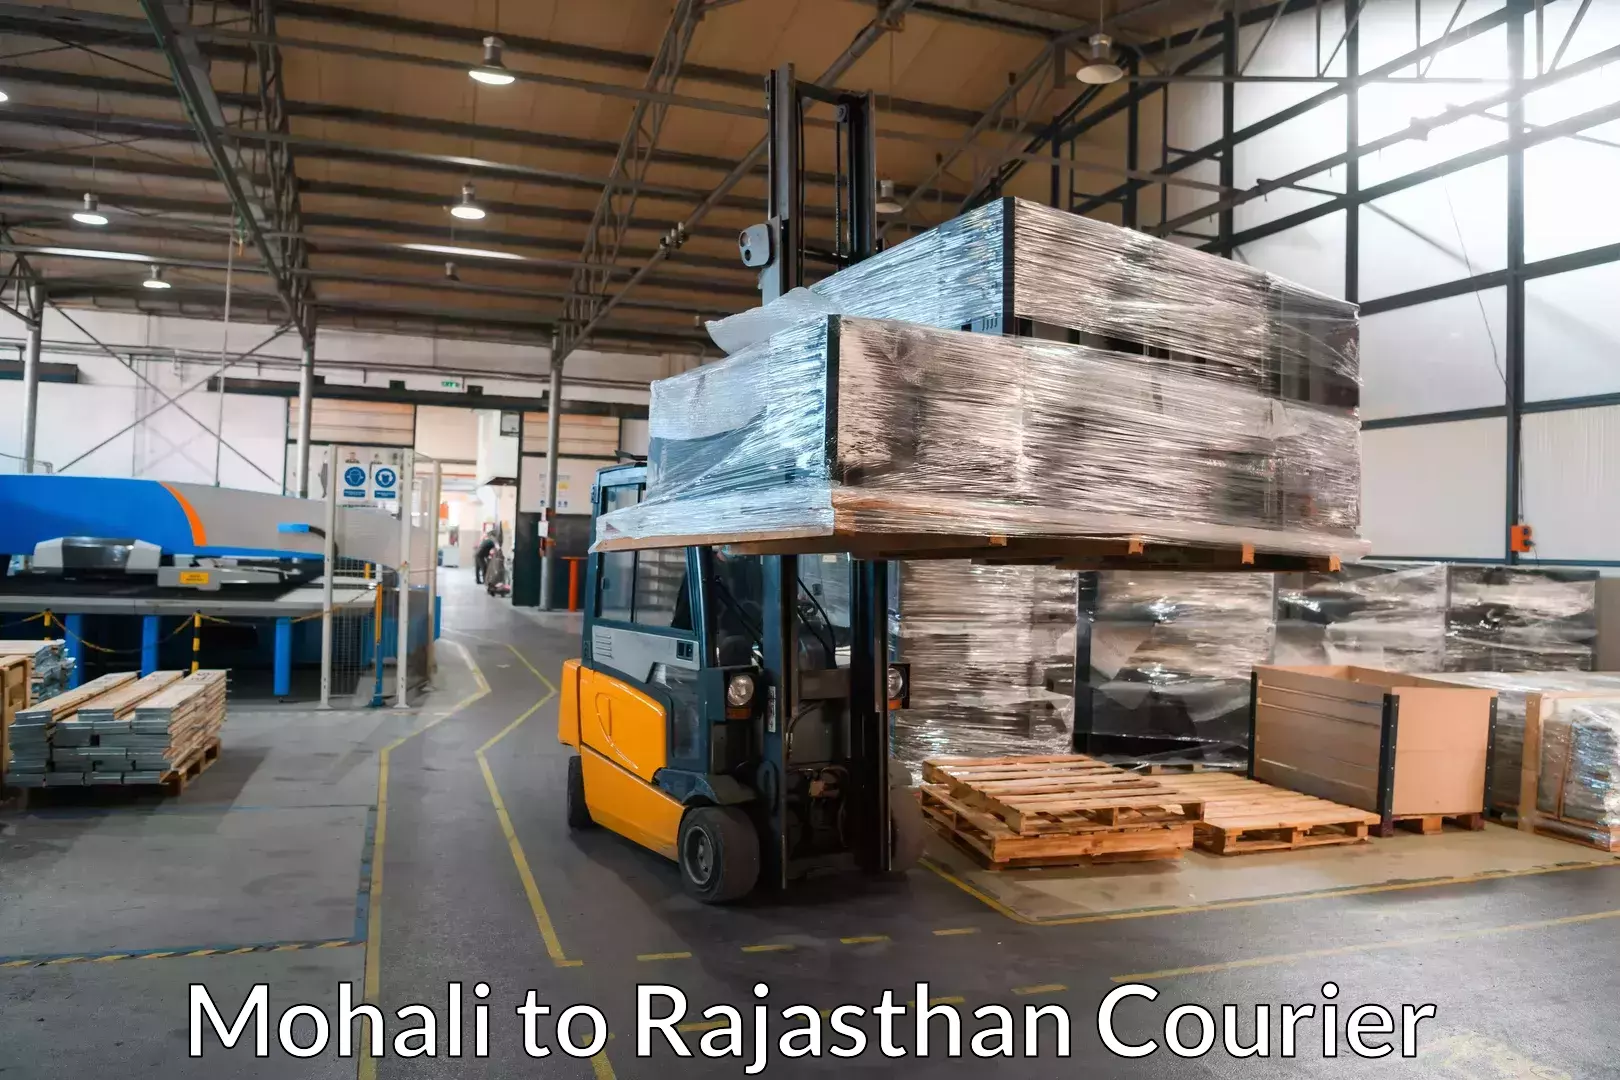 Furniture transport company Mohali to Jaipur